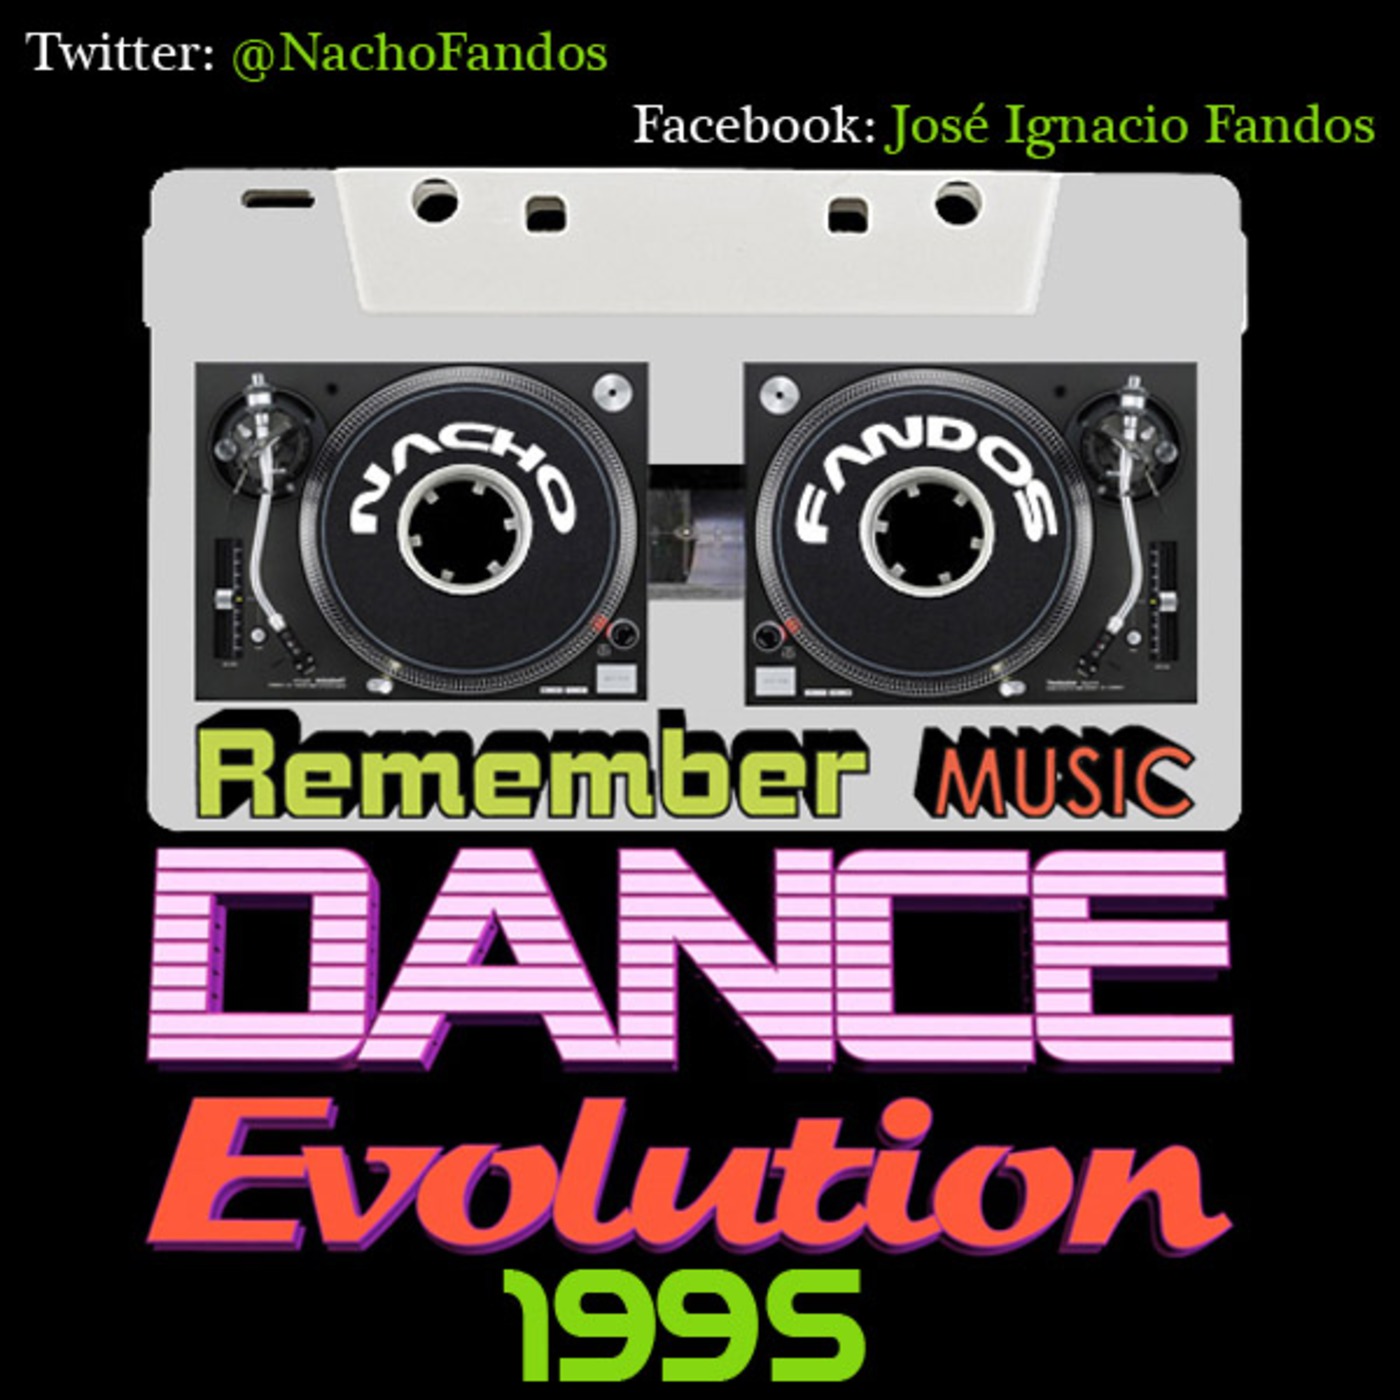 Remember music dance evolution audio podcast 1995 (140-148 bpms)